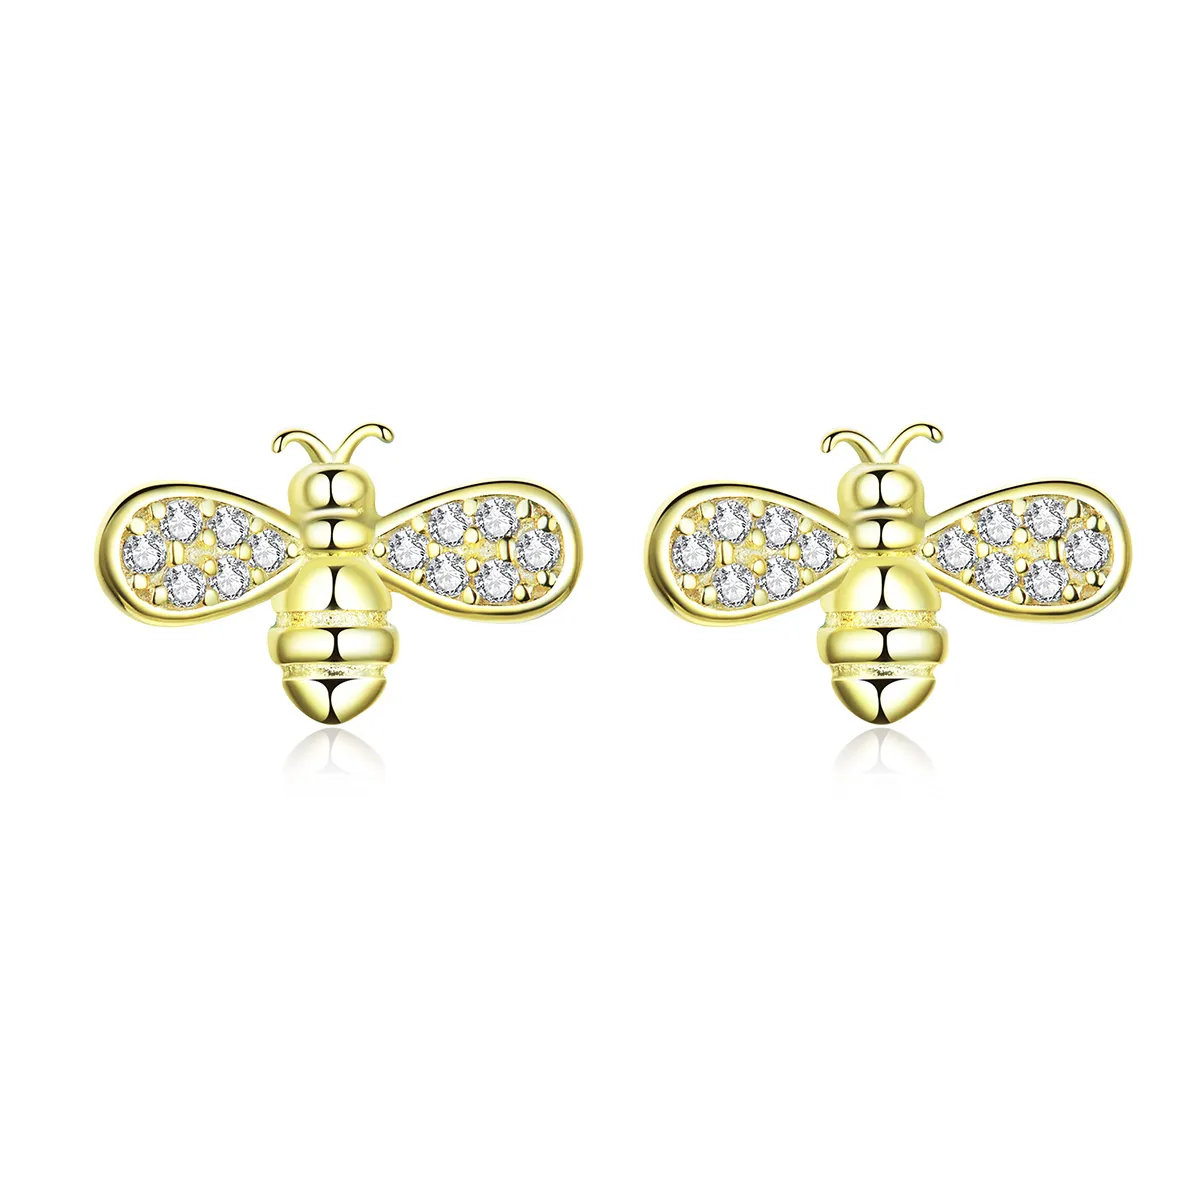 Pandora Style Gold-Plated Bee Stud Earrings - SCE669